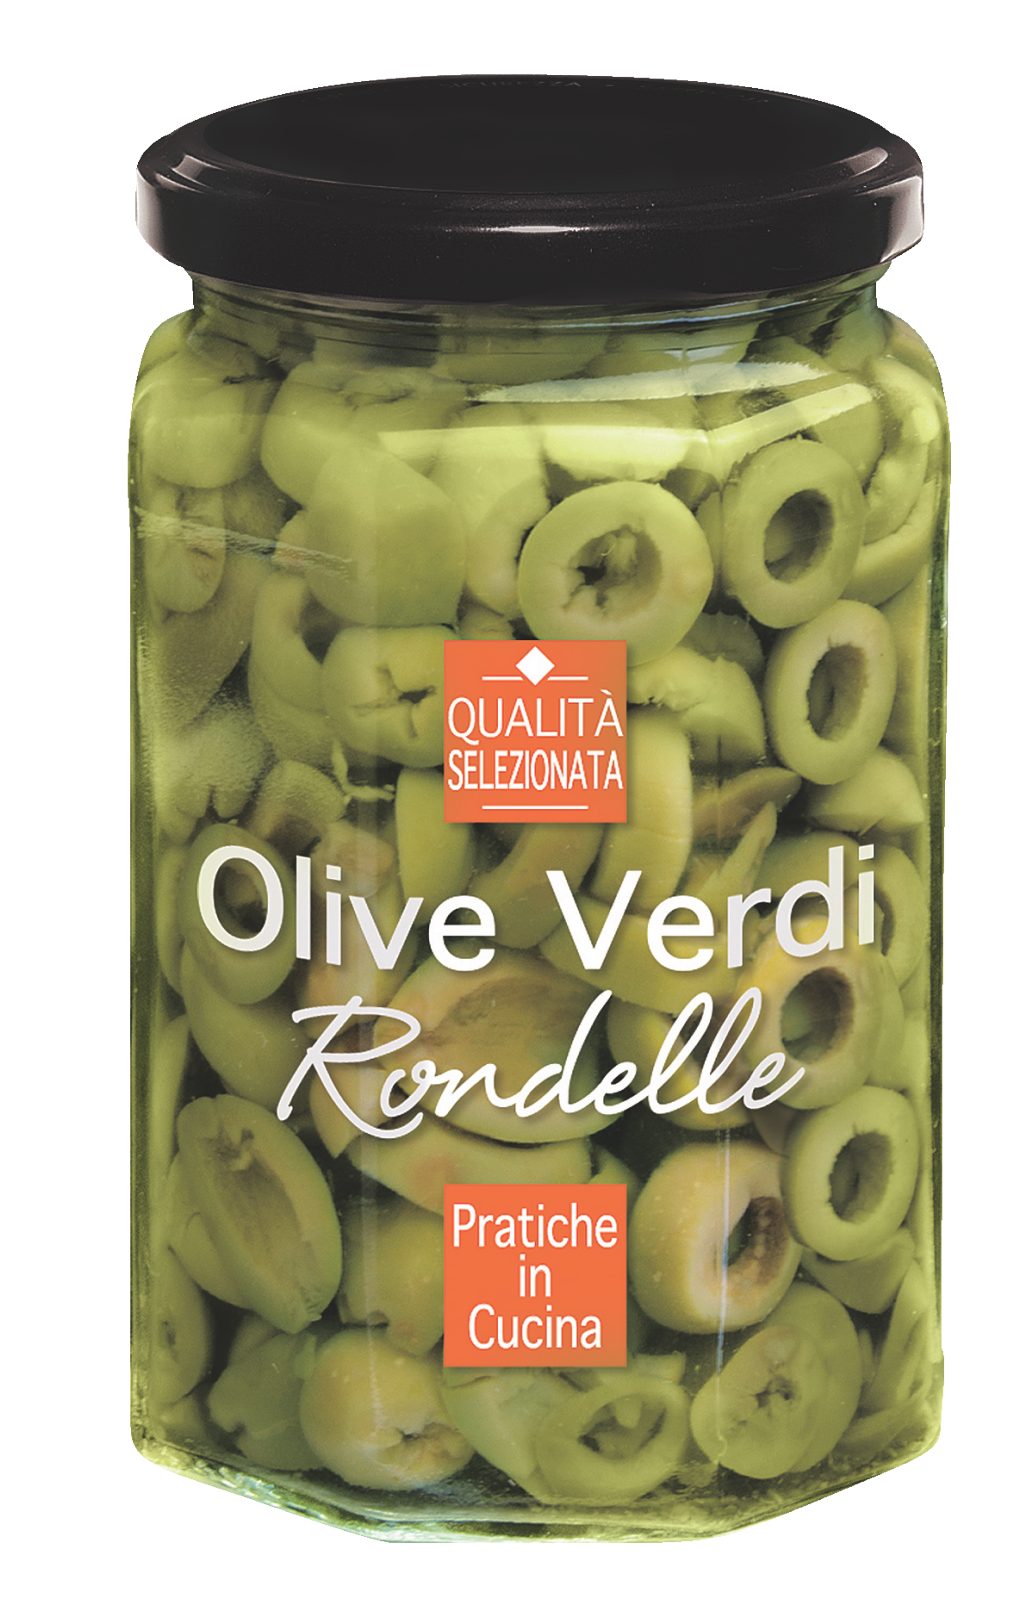 Olive Verdi Rondelle